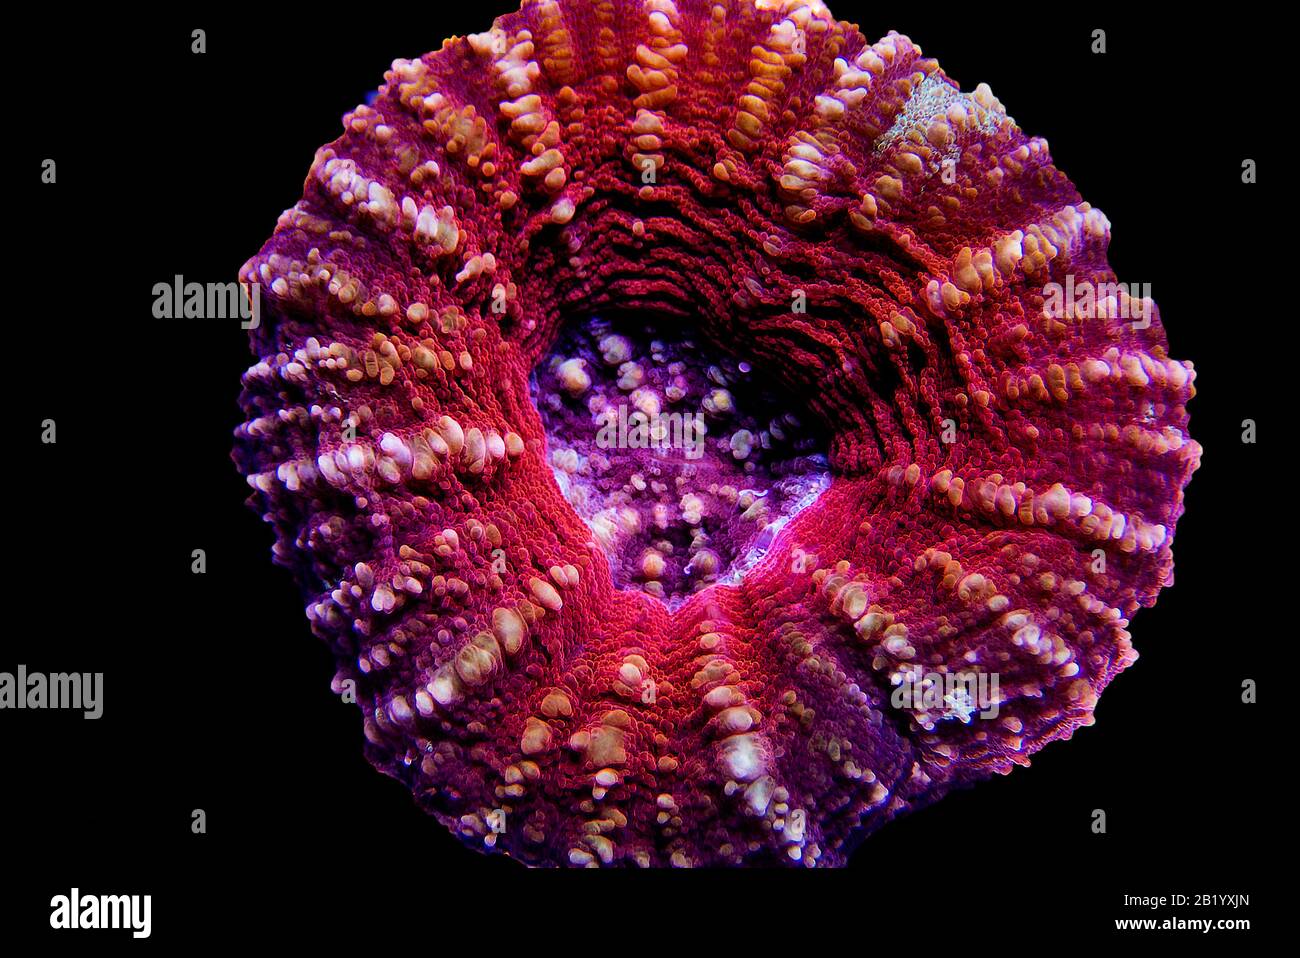 Scolymia wellsii LPS coral on black background Stock Photo